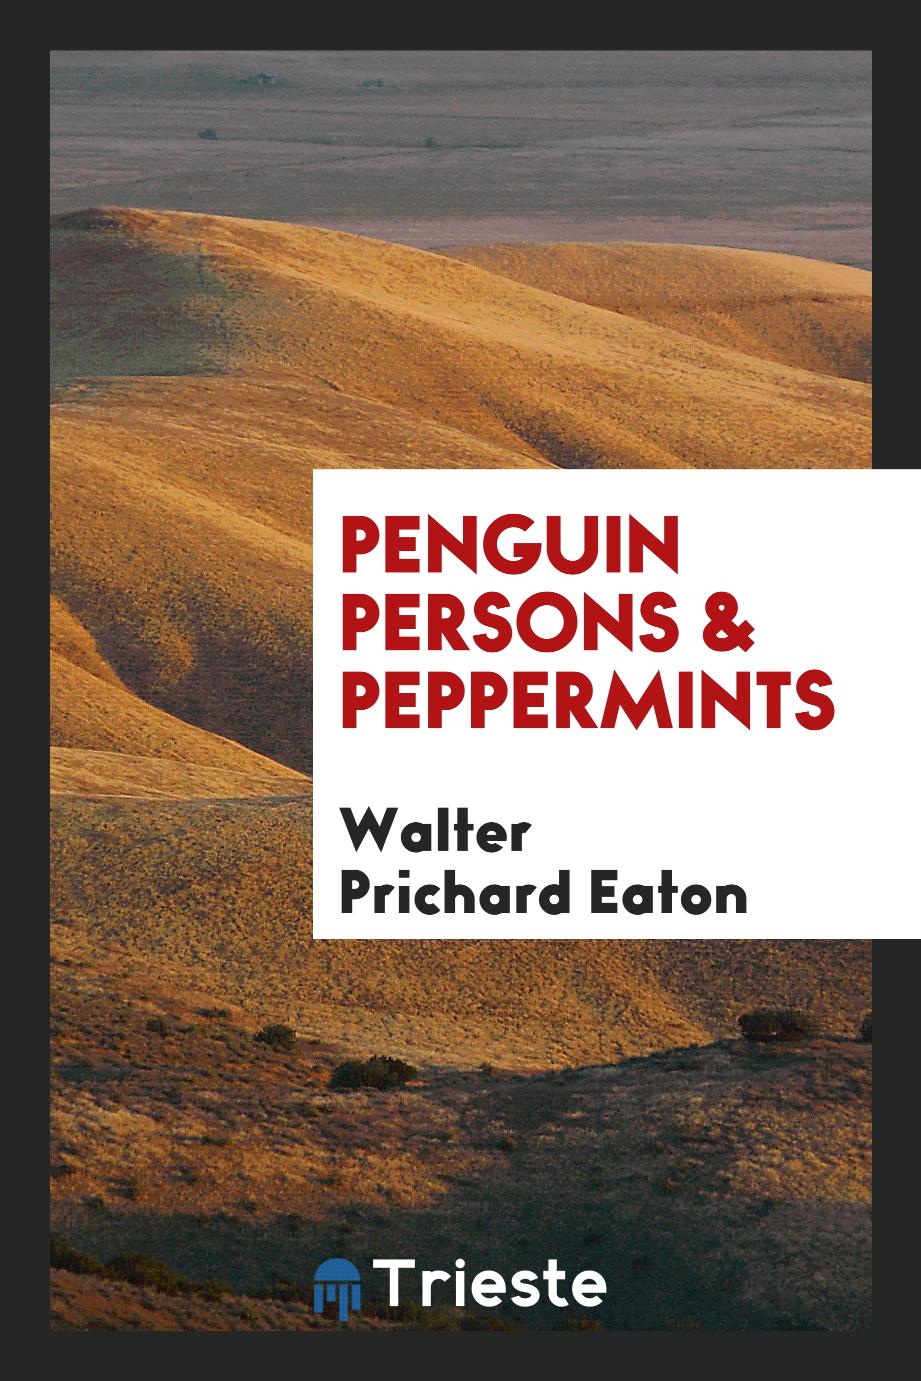 Penguin persons & peppermints